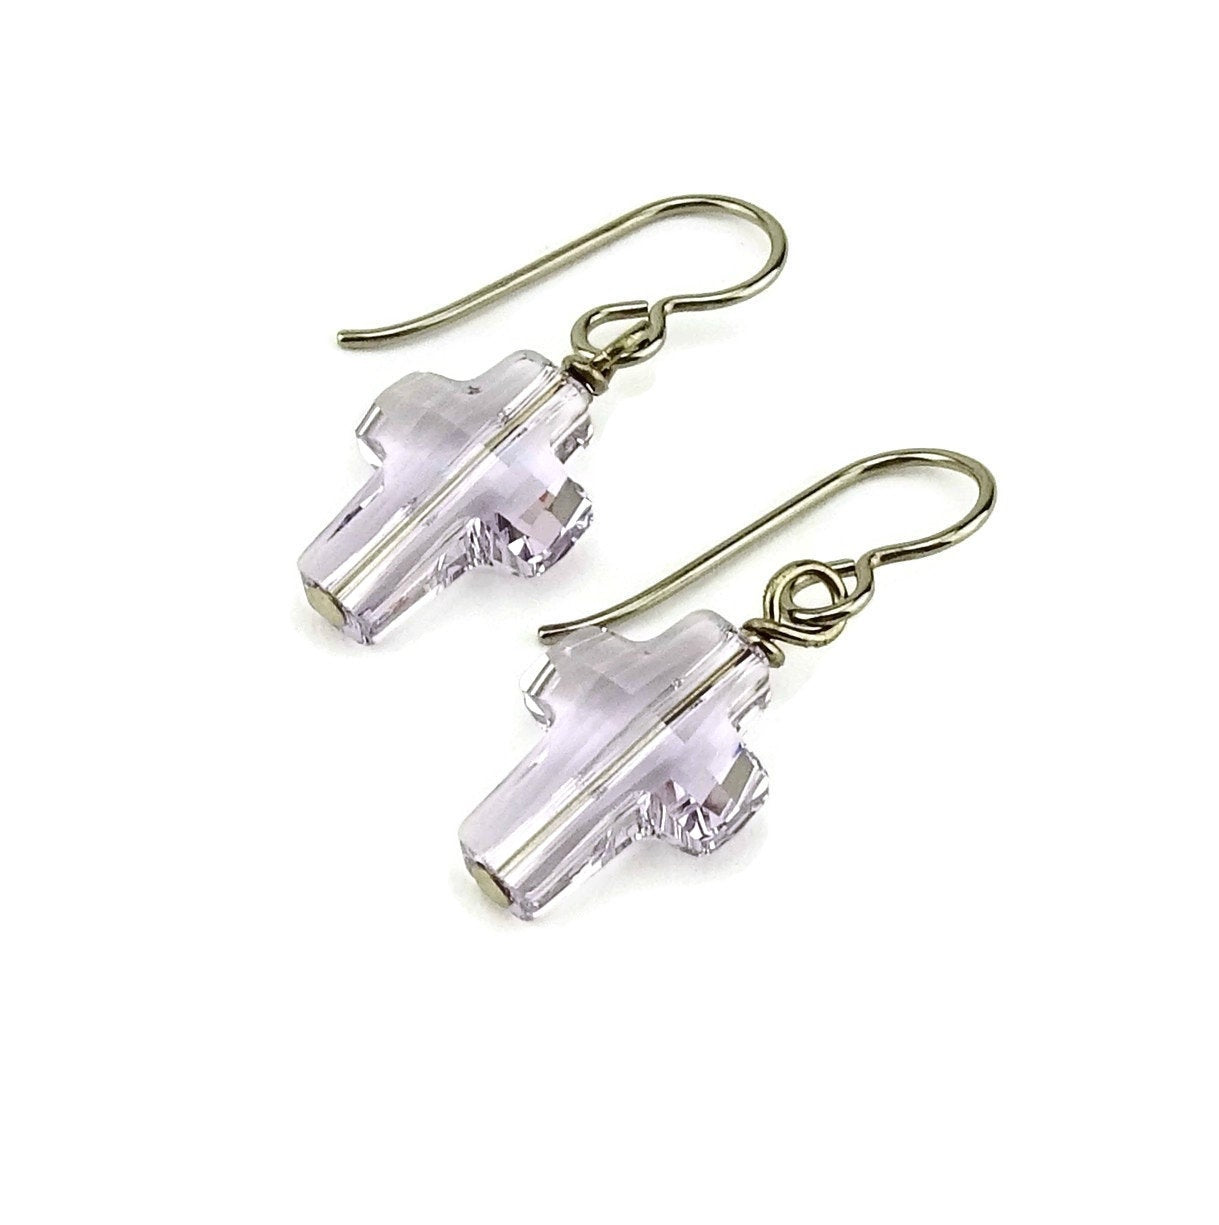 Smoky Mauve Cross Titanium Earrings, Niobium Wire Wrapped Pale Purple Swarovski Crystal, Hypoallergenic Nickel Free Sensitive Ears Earrings